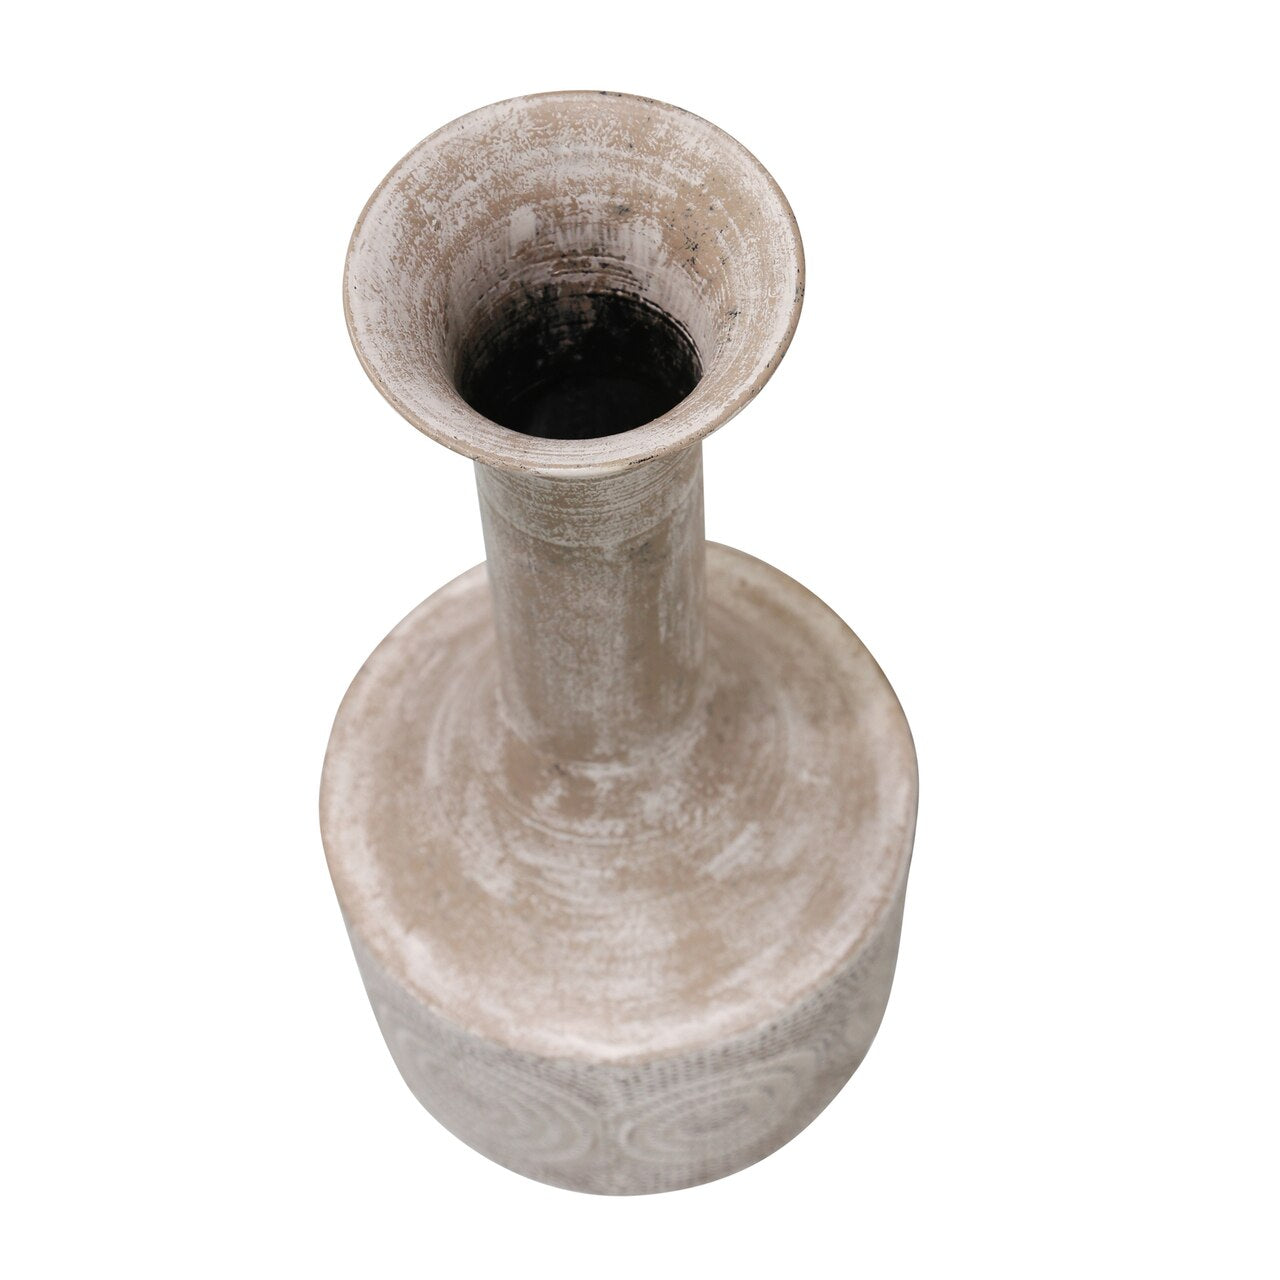 Metal 19" Textured Vase, White